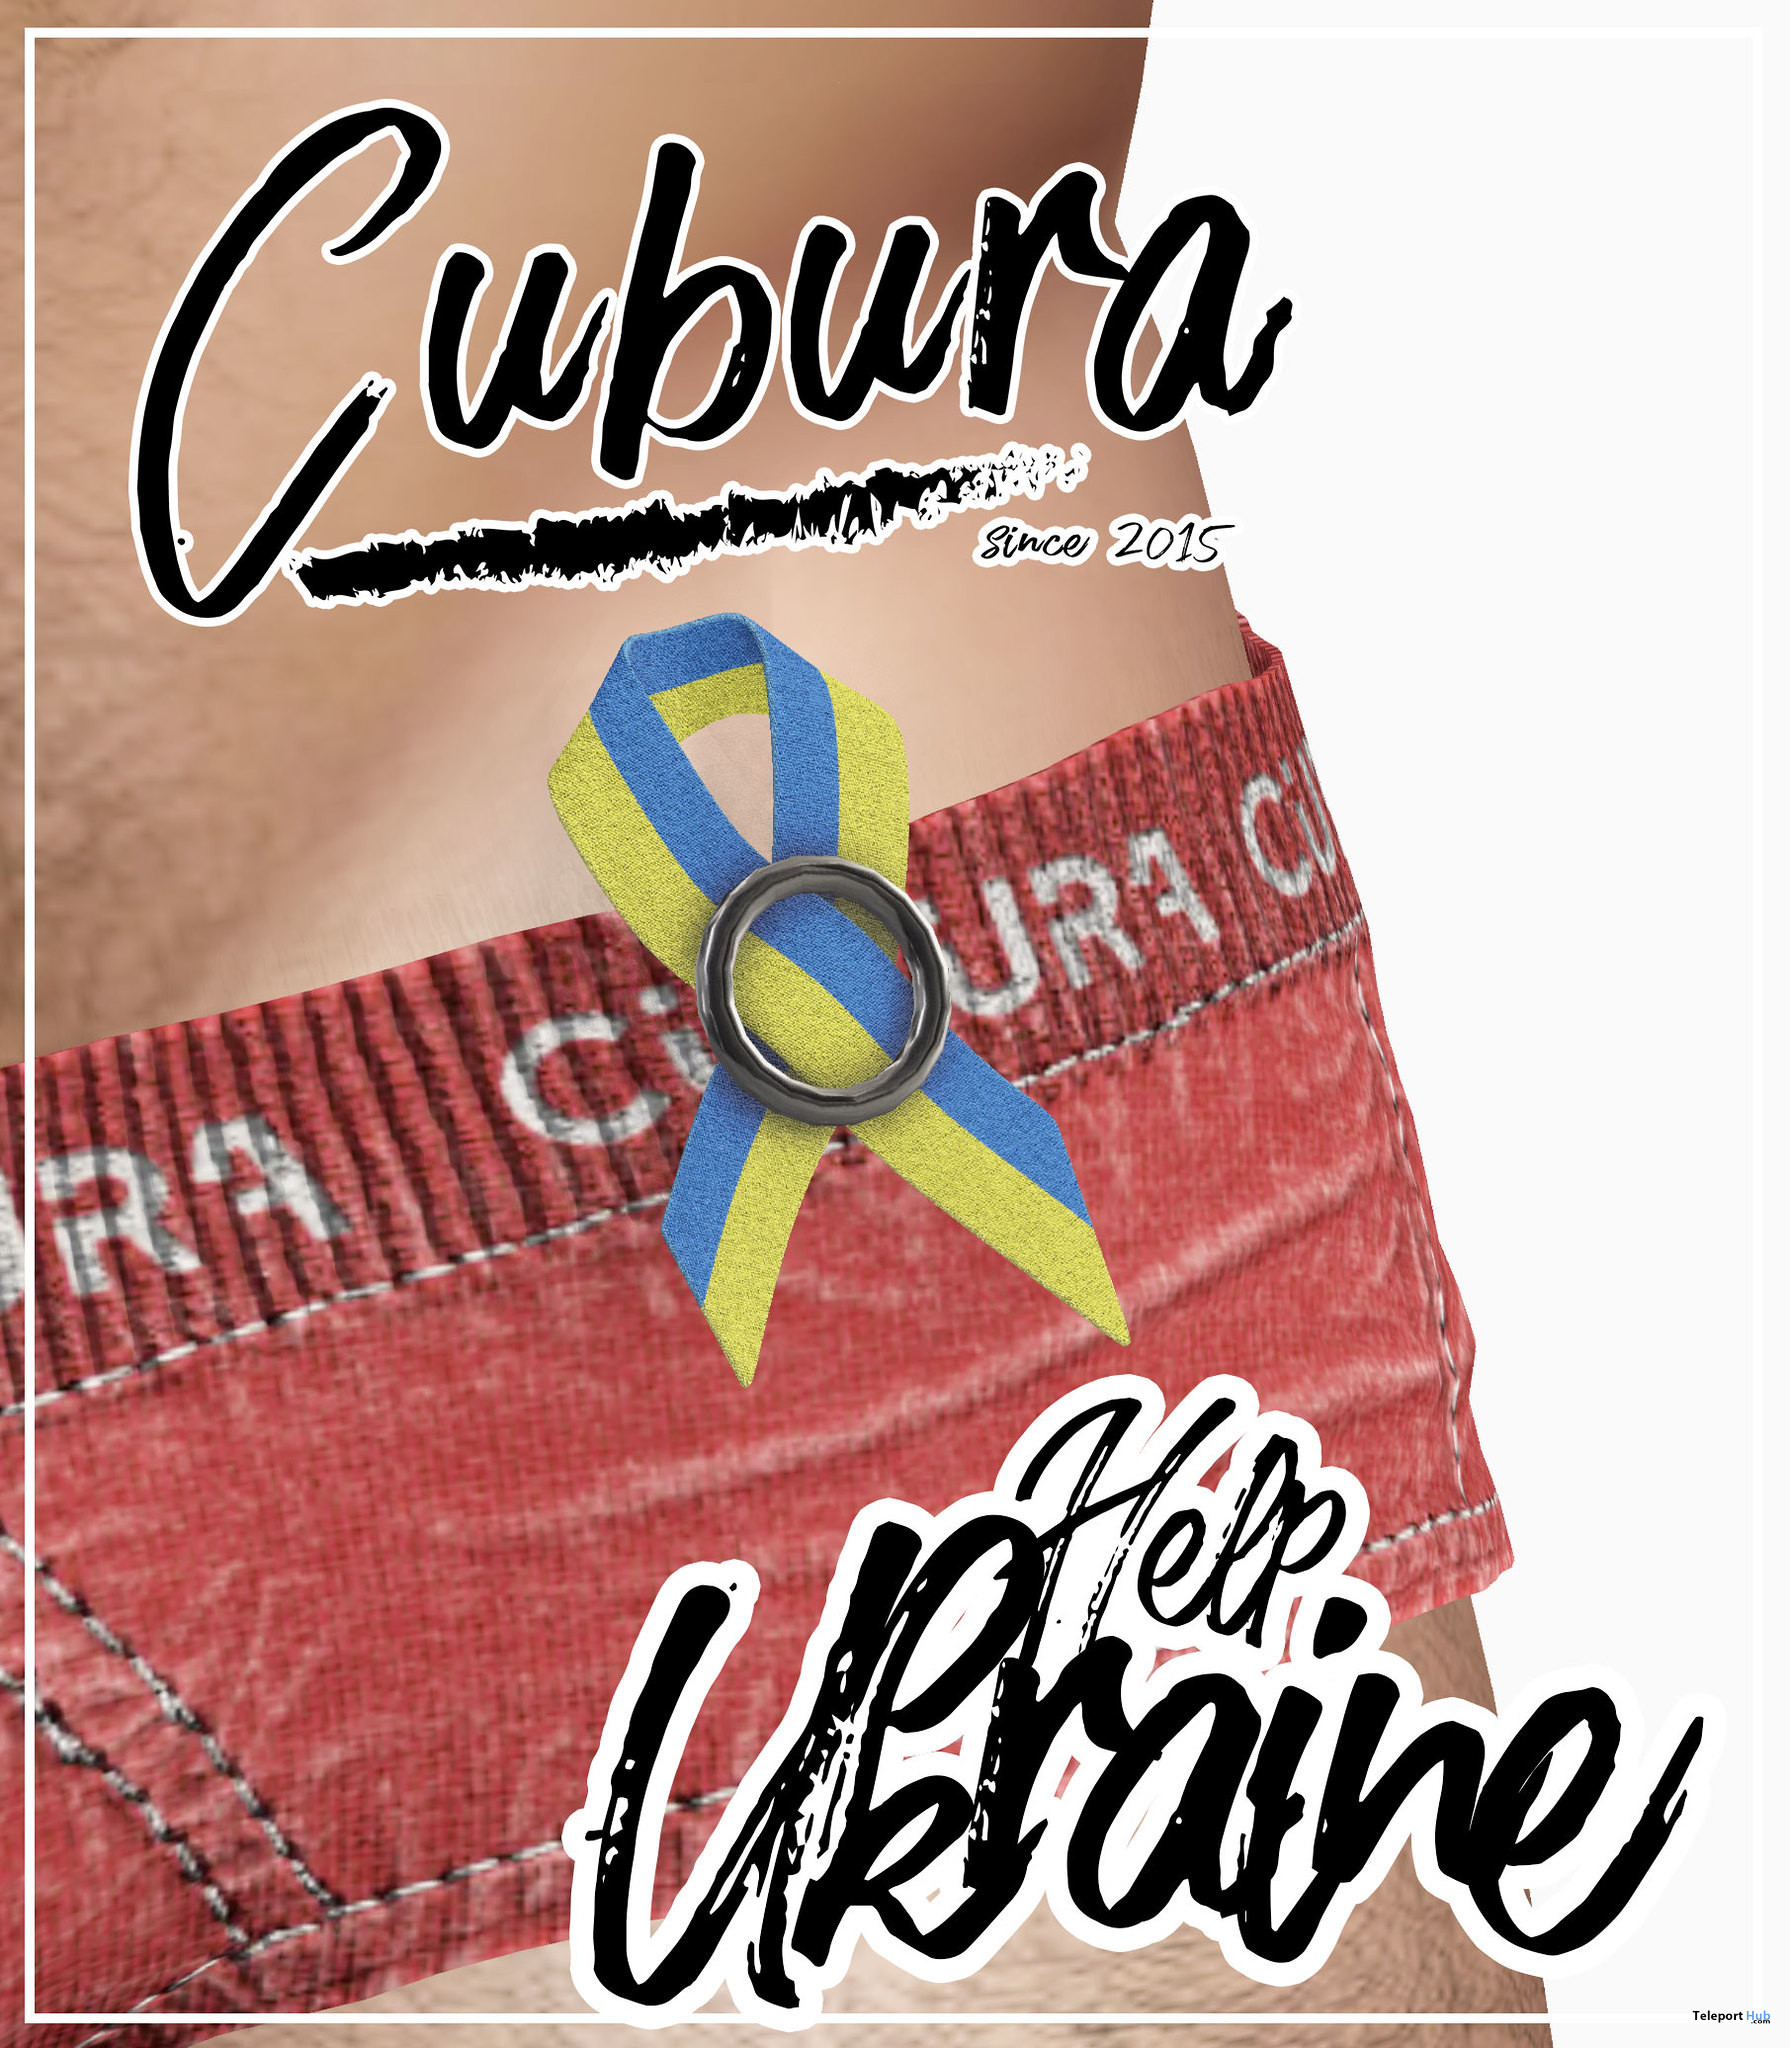 Help Ukraine Ribbon March 2022 Gift by Cubura - Teleport Hub - teleporthub.com